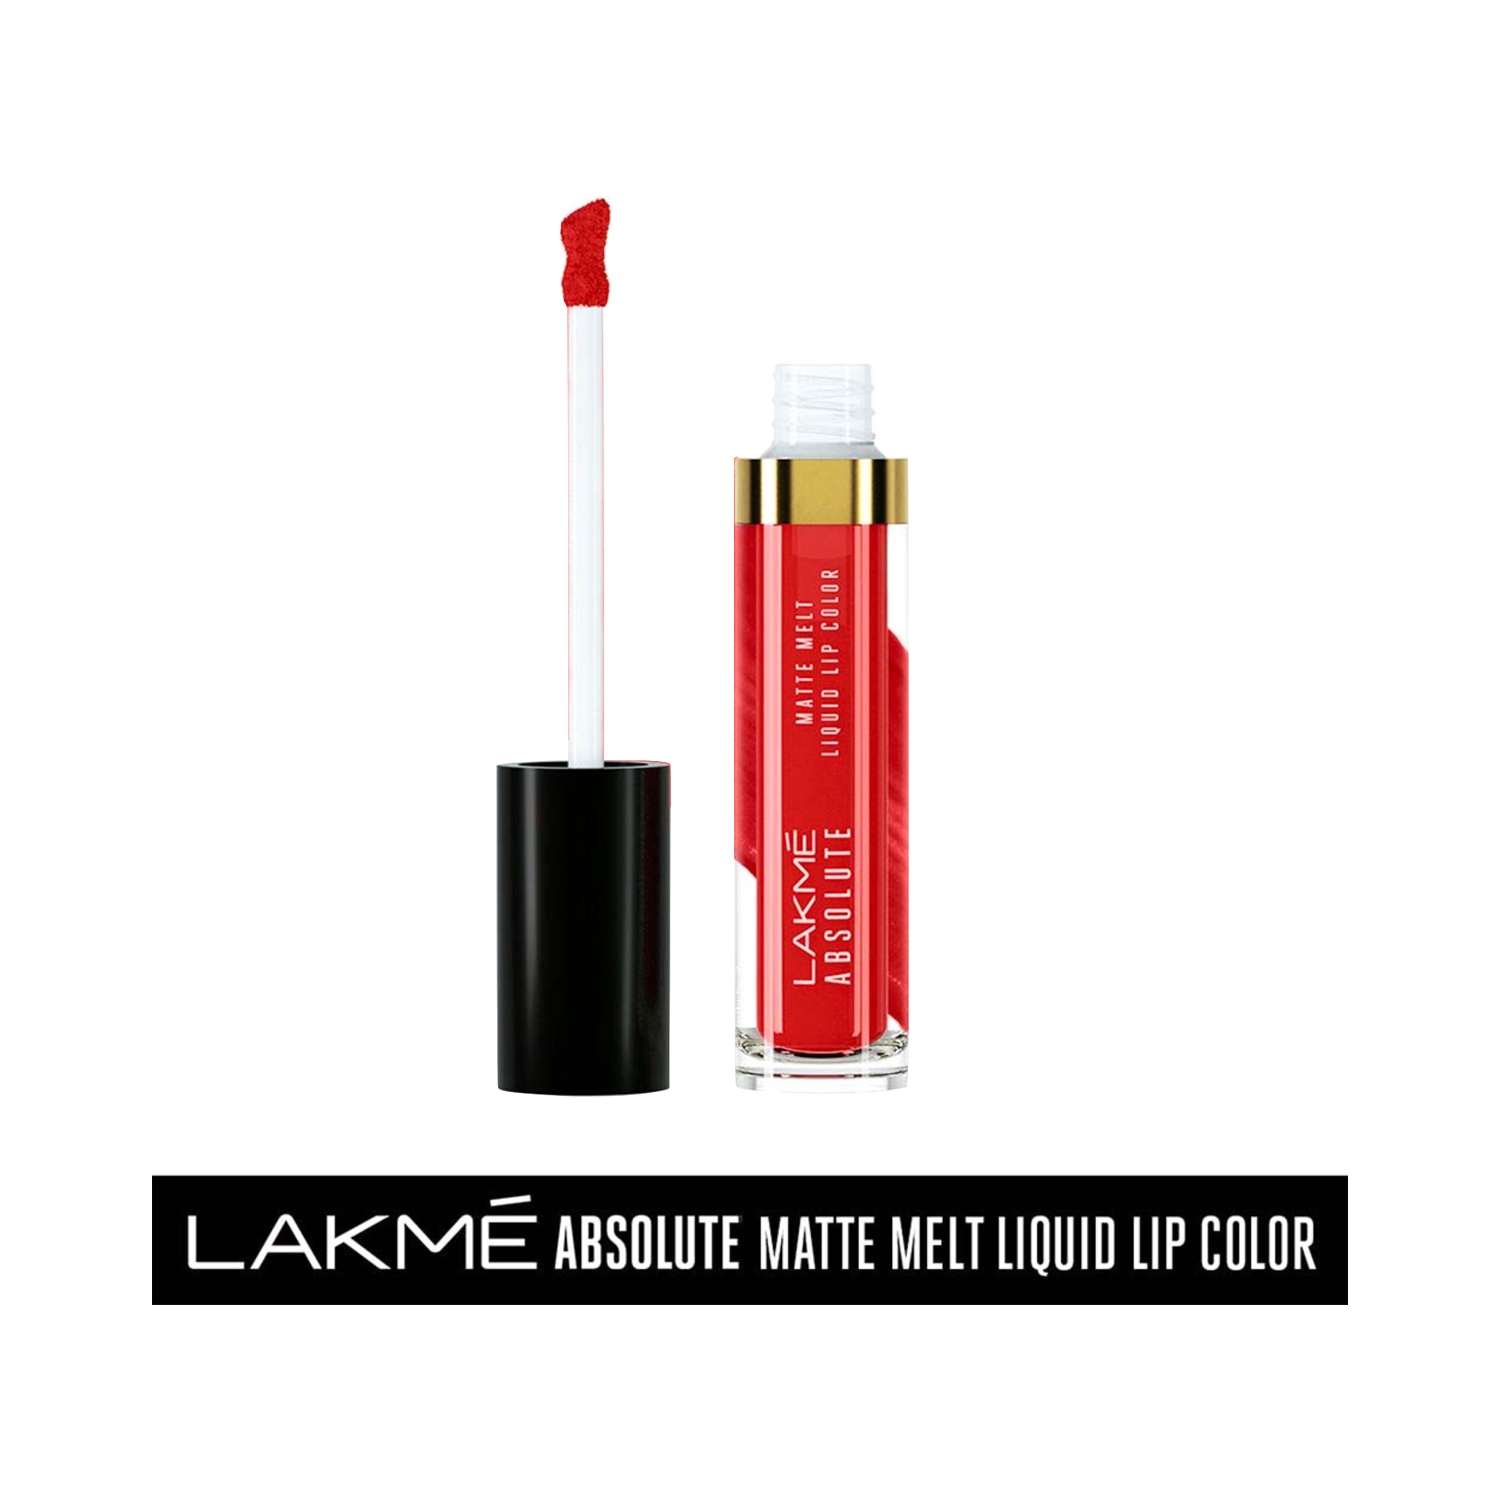 Lakme | Lakme Absolute Matte Melt Liquid Lip Color - Rhythmic Red (6ml)